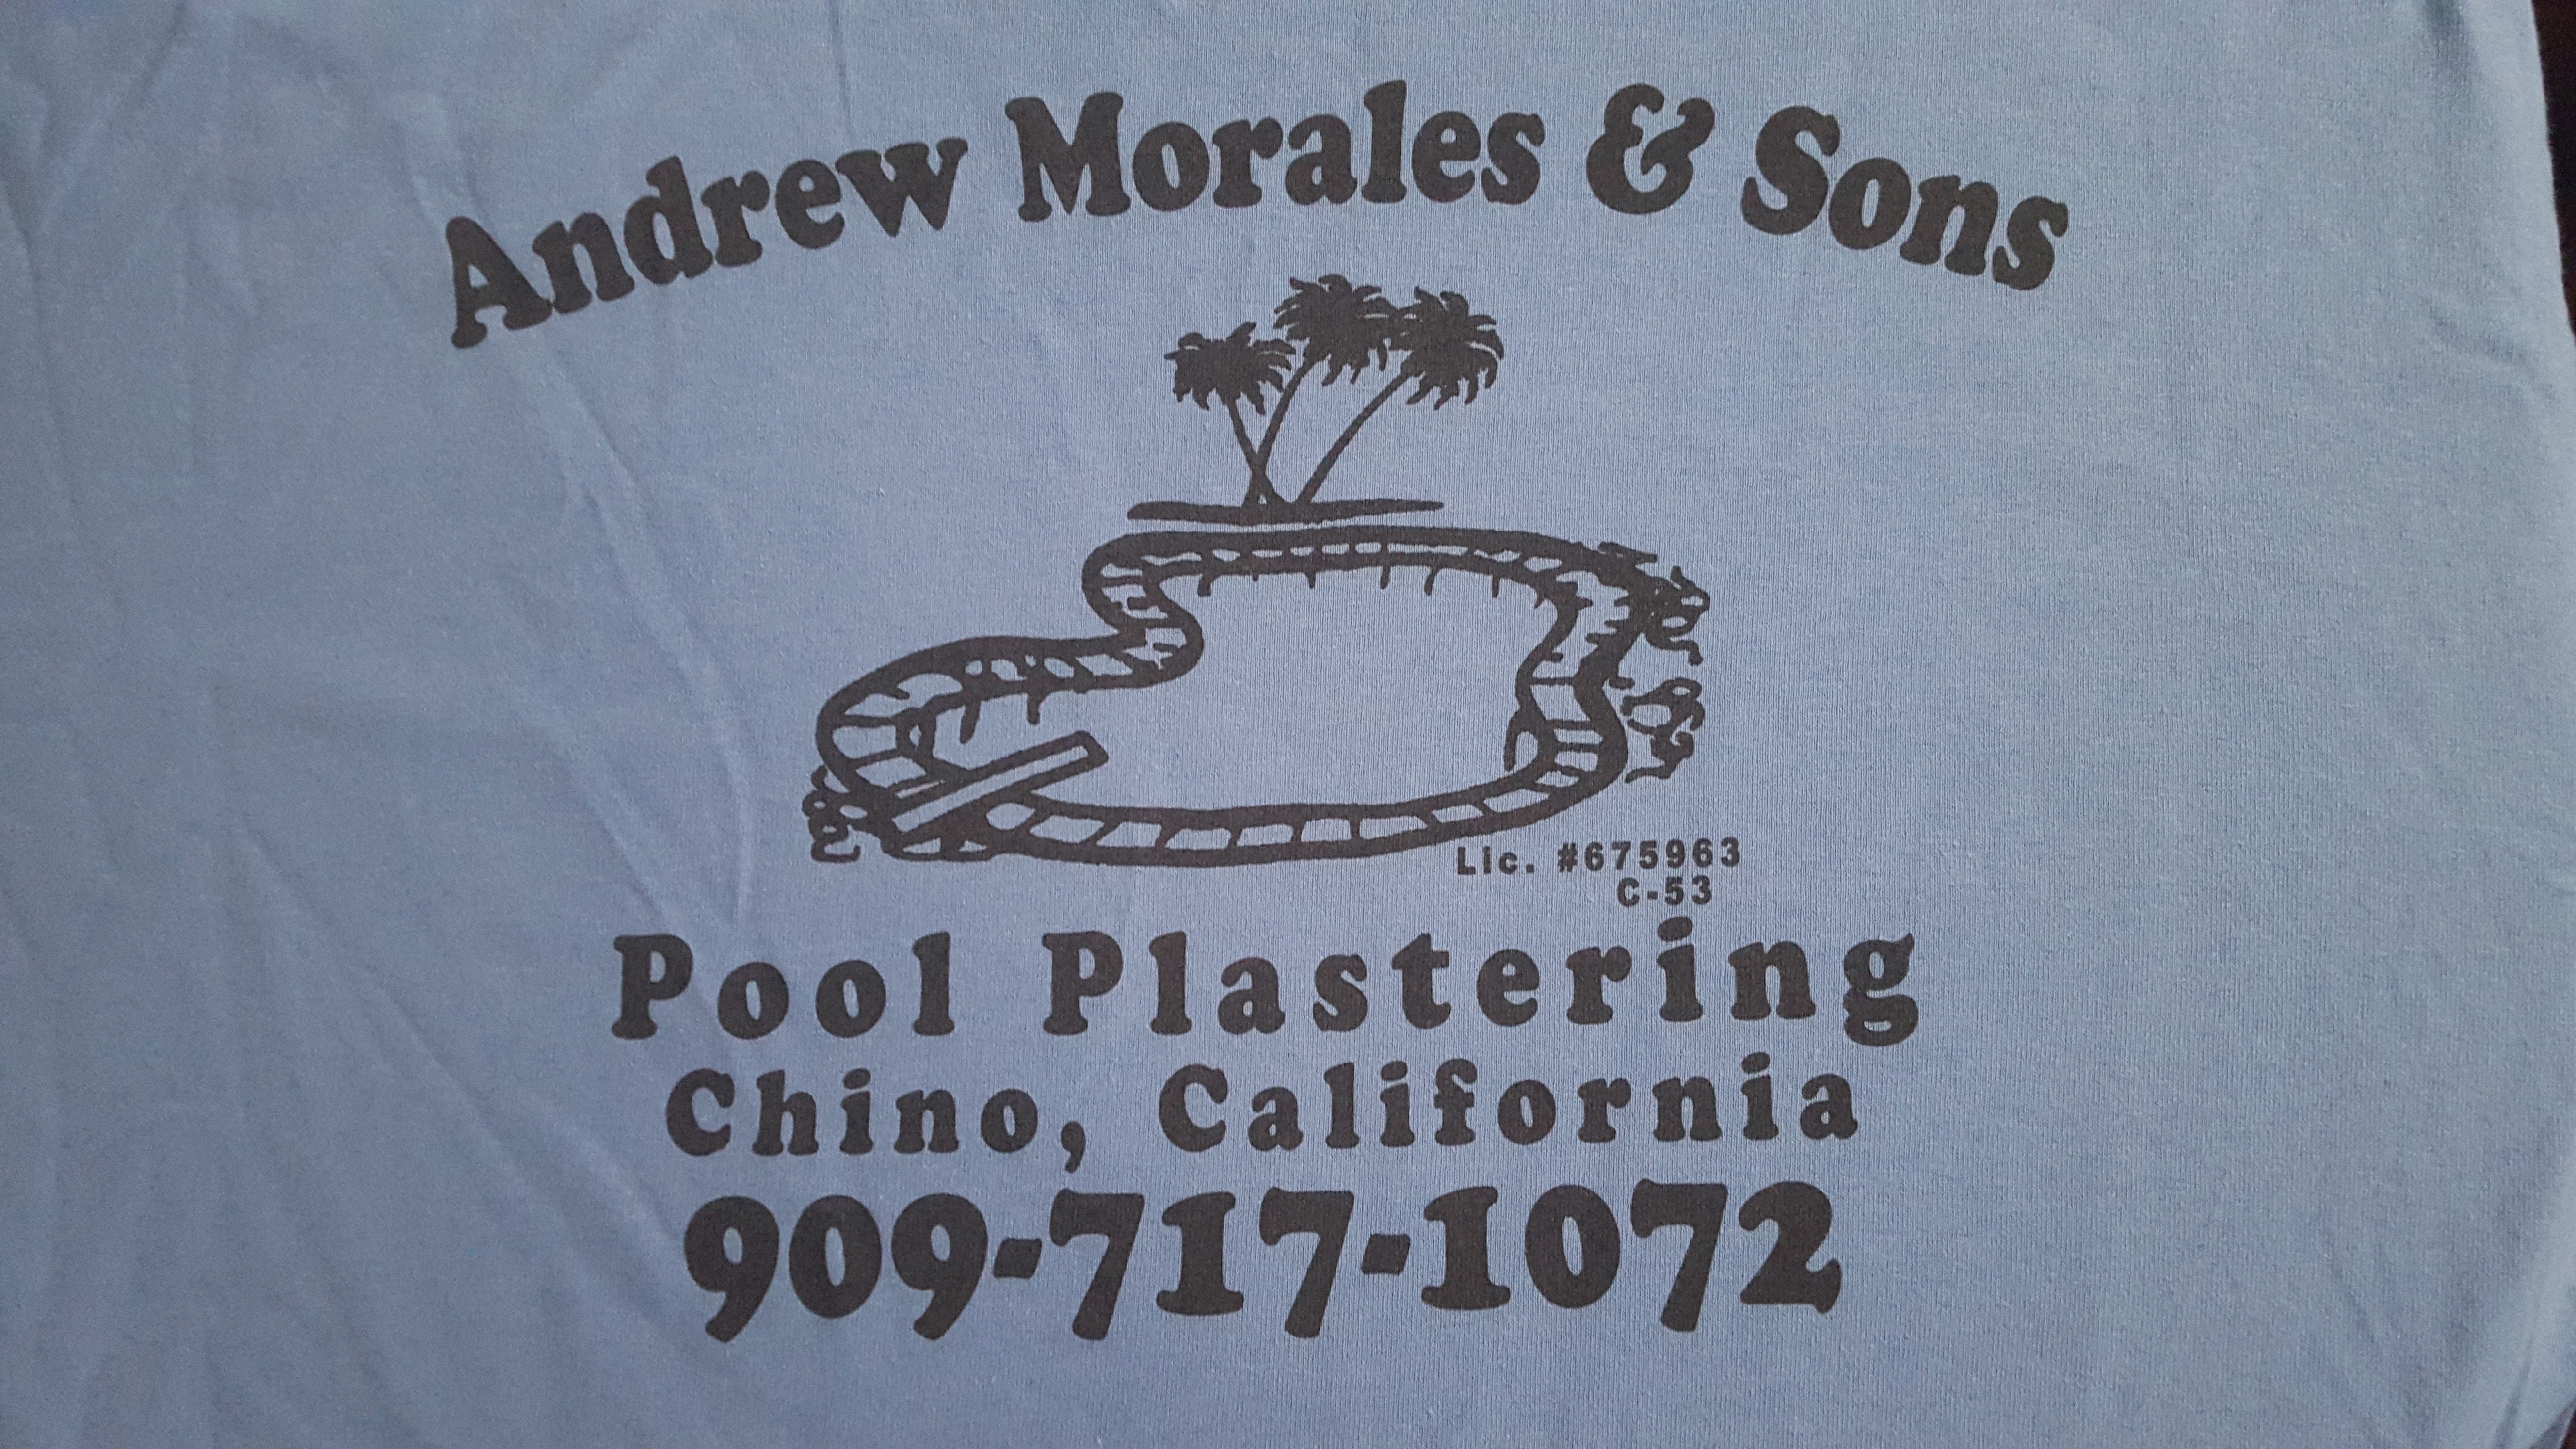 Andrew Morales & Sons Pool Plastering Logo